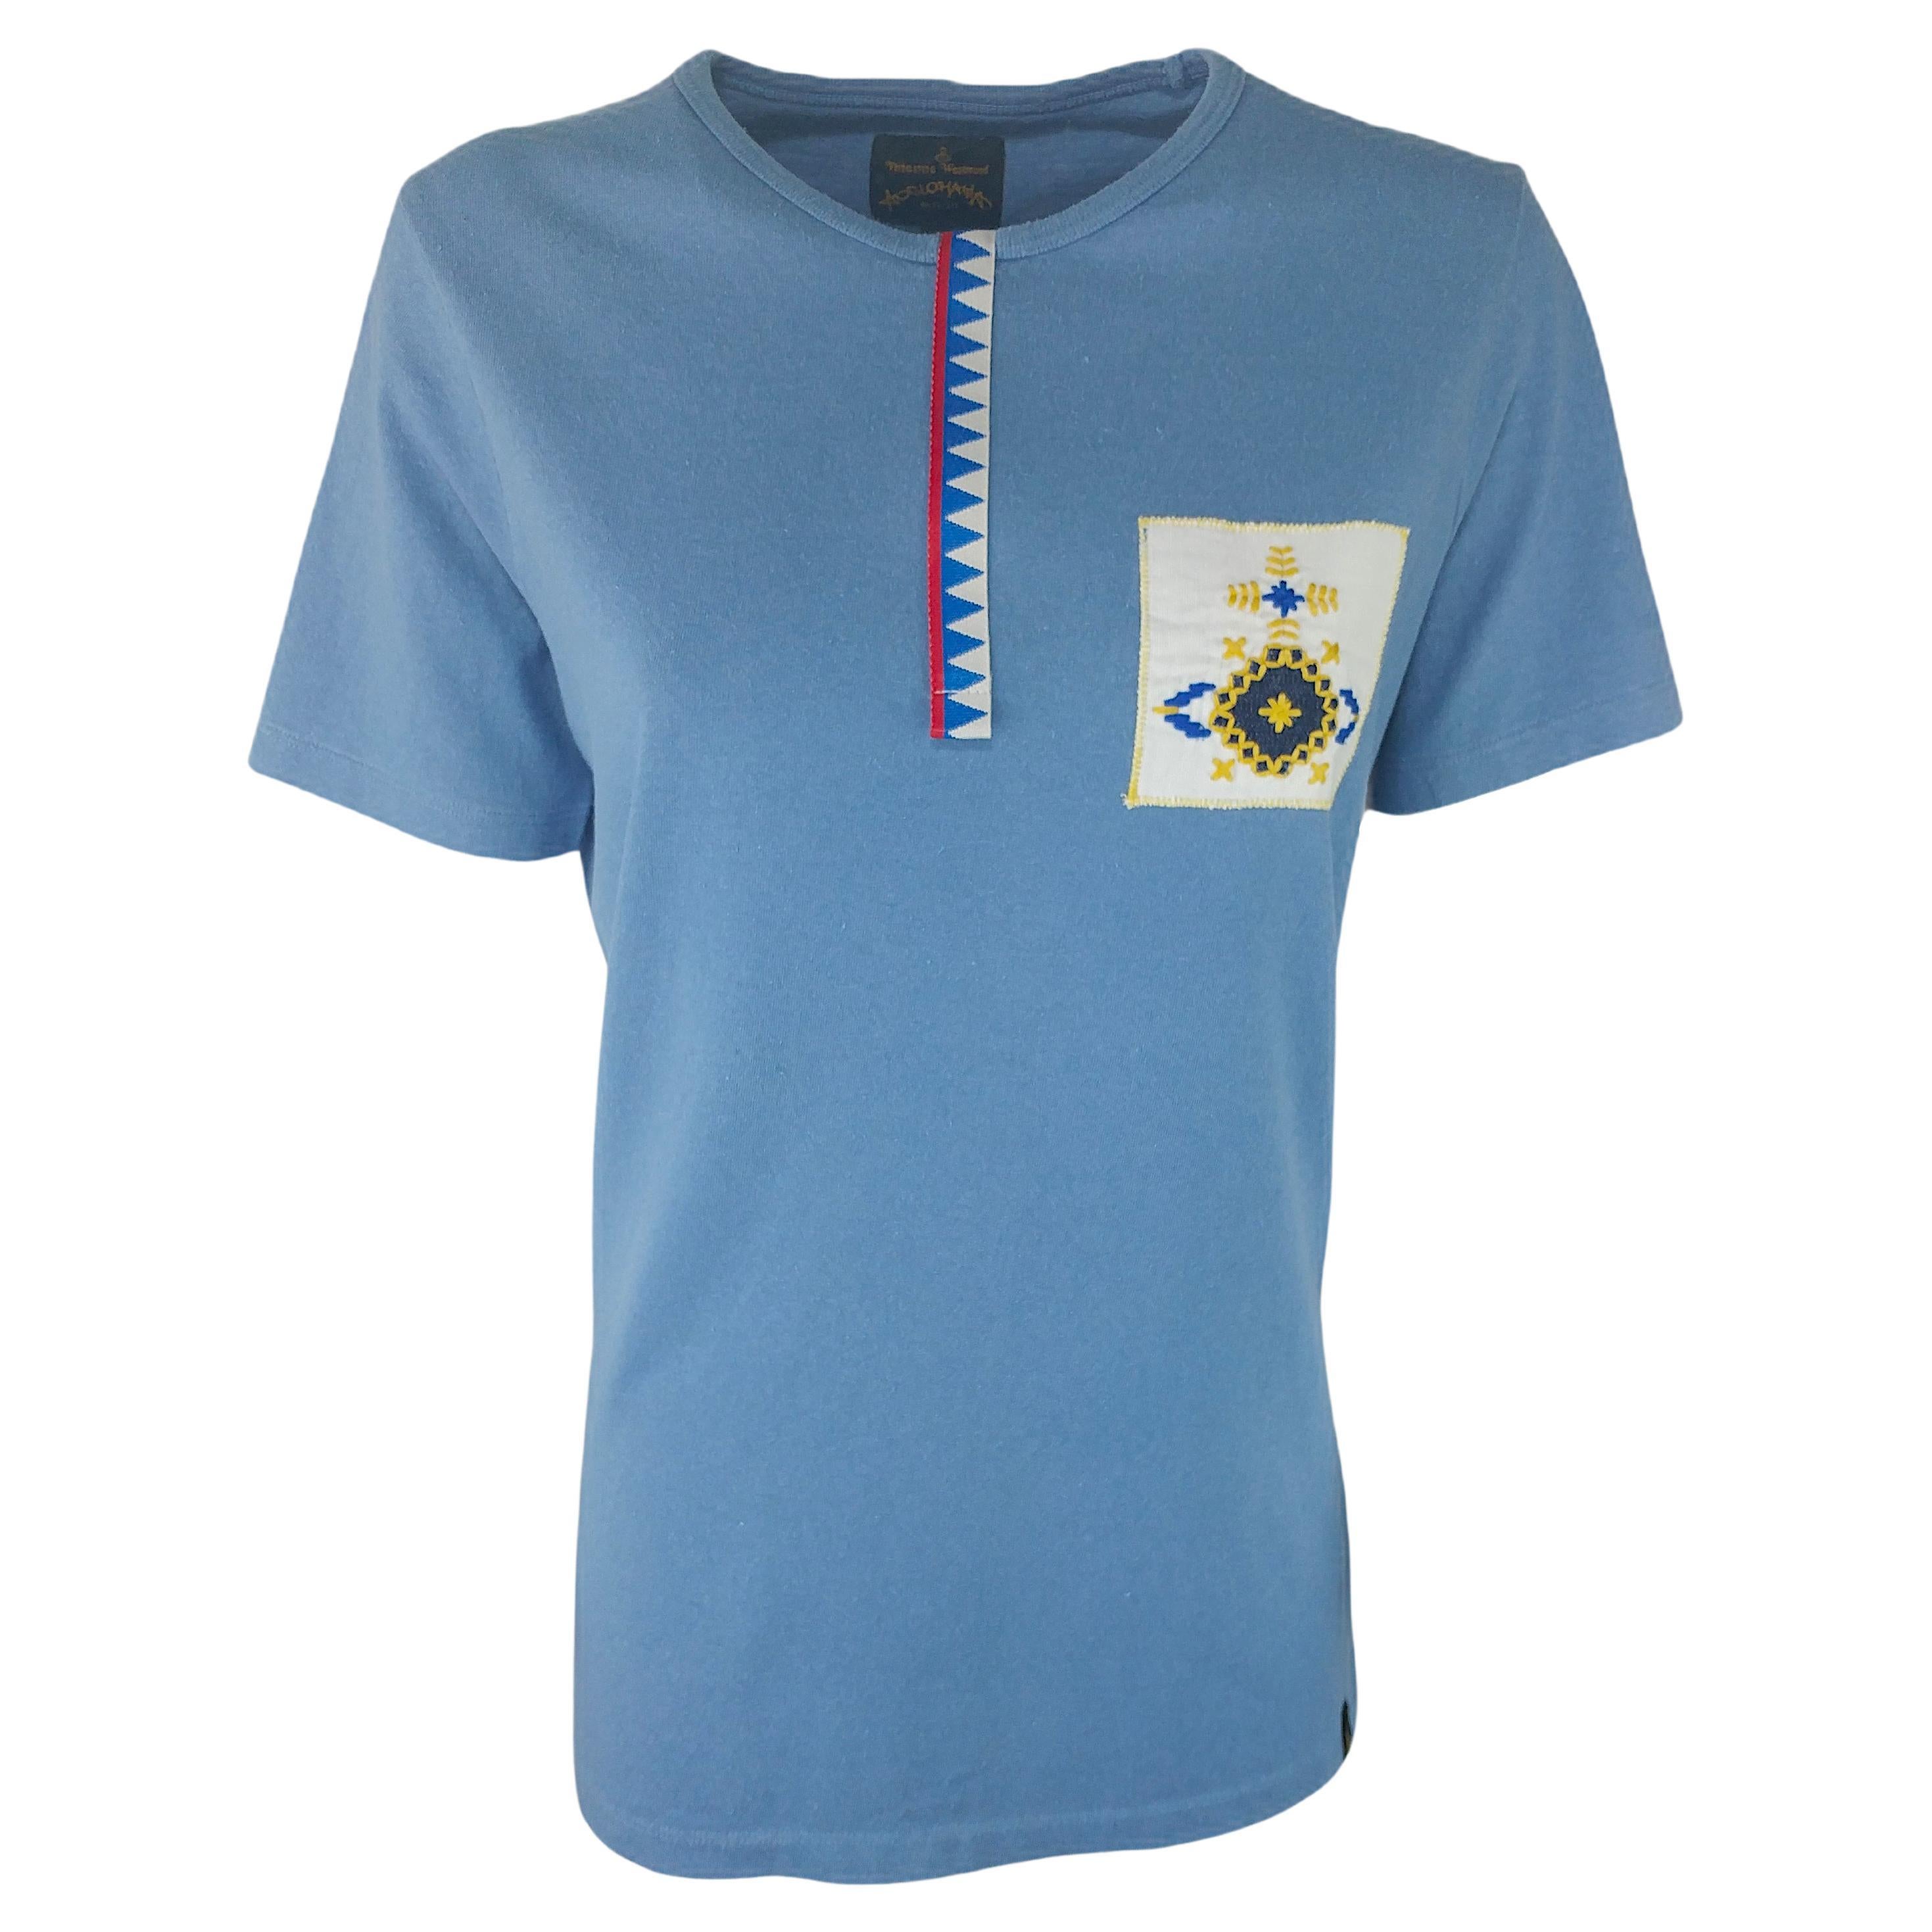 VIVIENNE WESTWOOD - Indigo Blue Cotton T-Shirt with Embroidered Monogram Size M